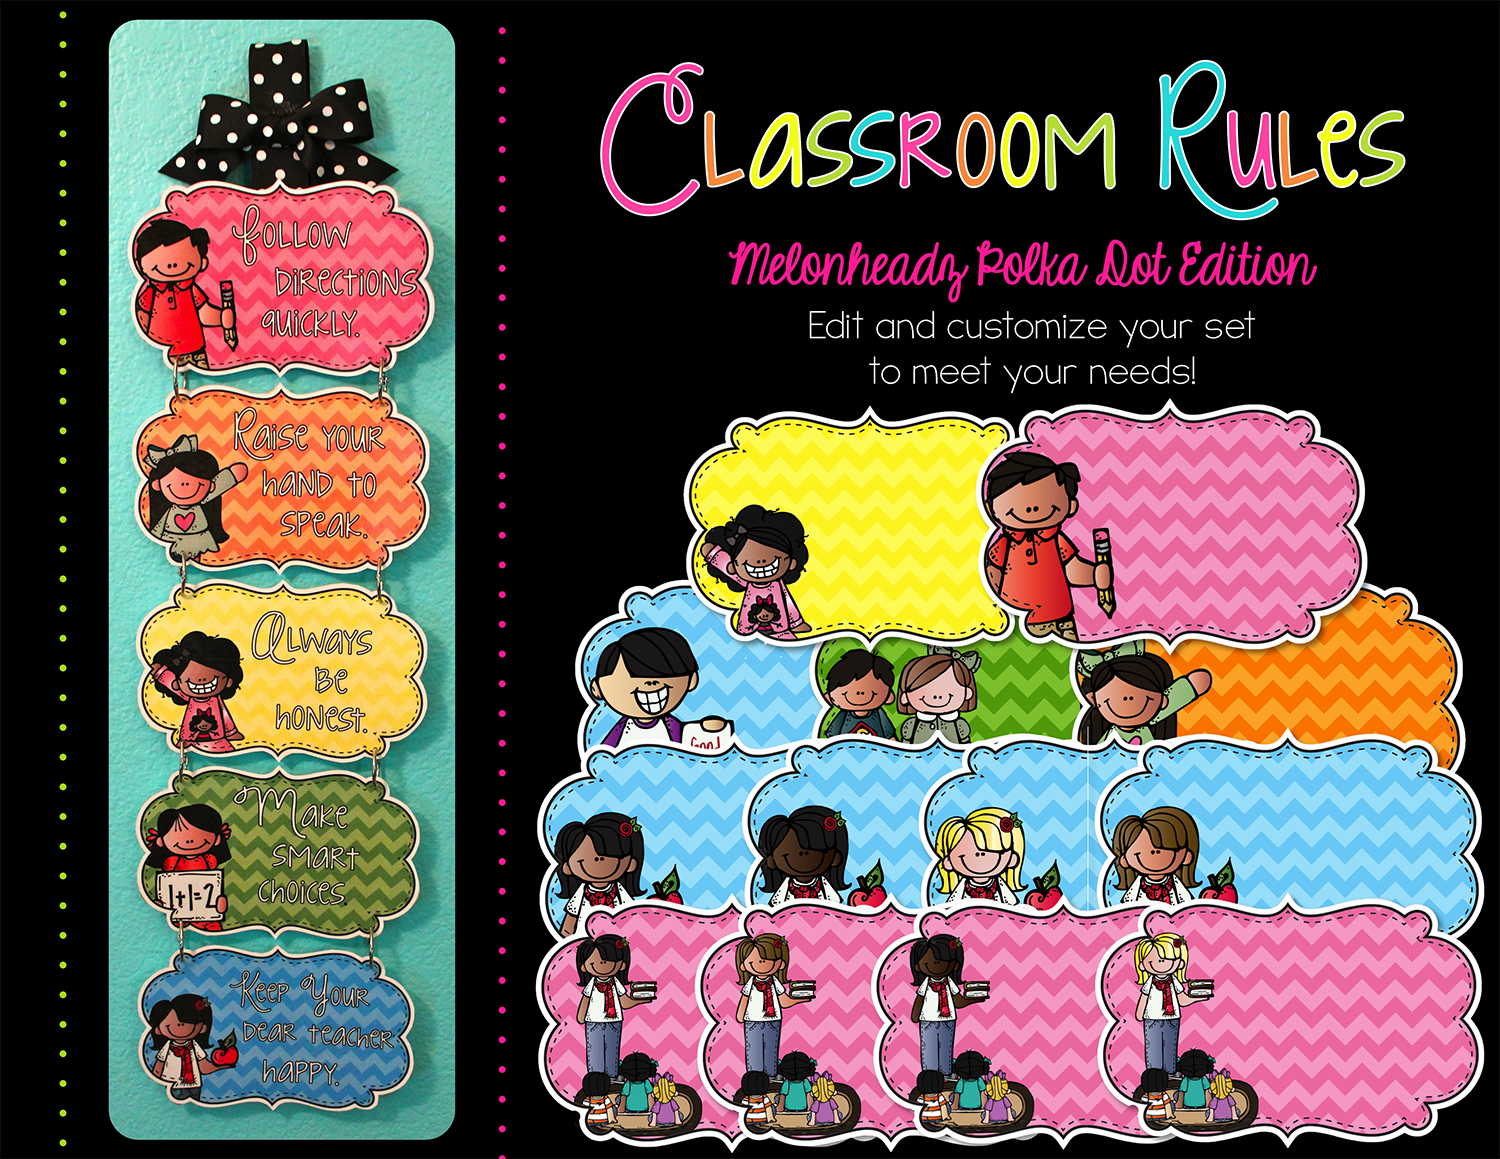 http://www.teacherspayteachers.com/Product/Editable-Classroom-Rules-Melonheadz-Chevron-Edition-1336749